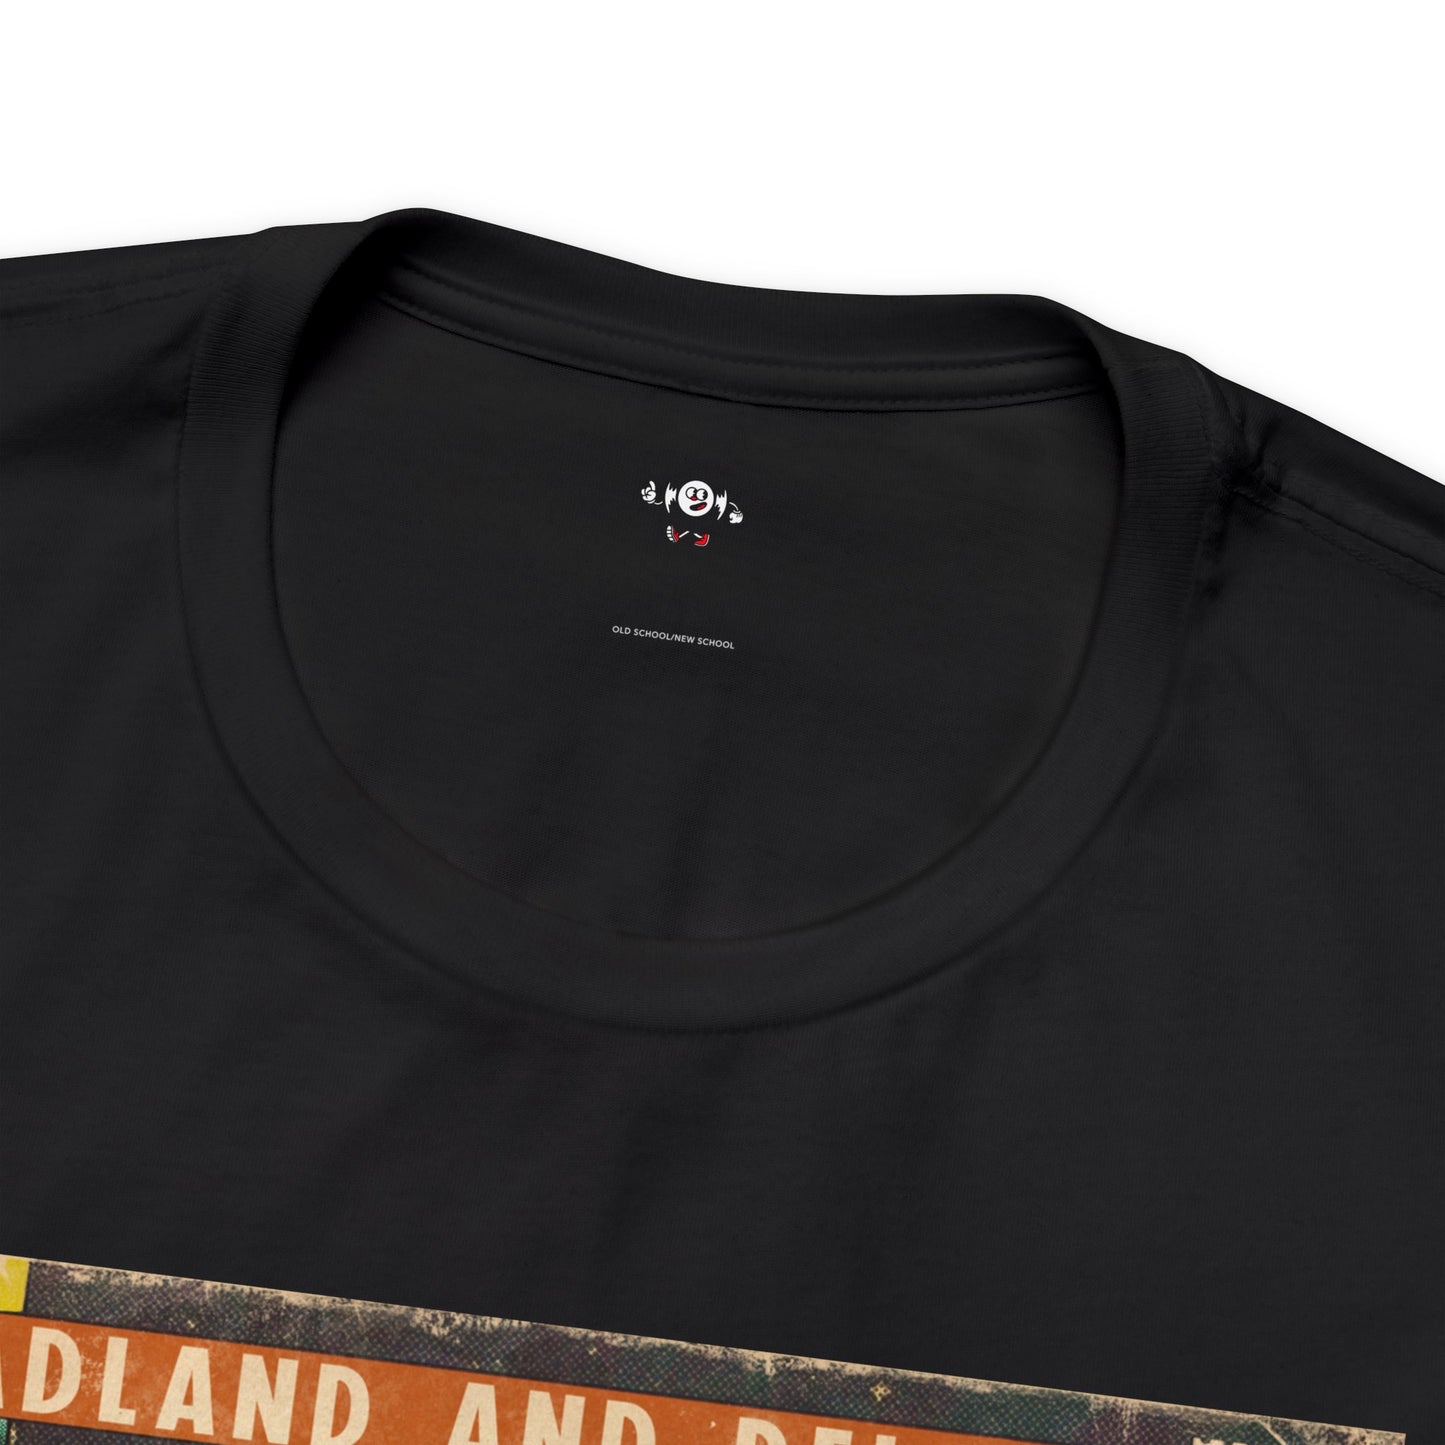 OutKast - Atliens 2 Dope Boys - Unisex Jersey T-Shirt